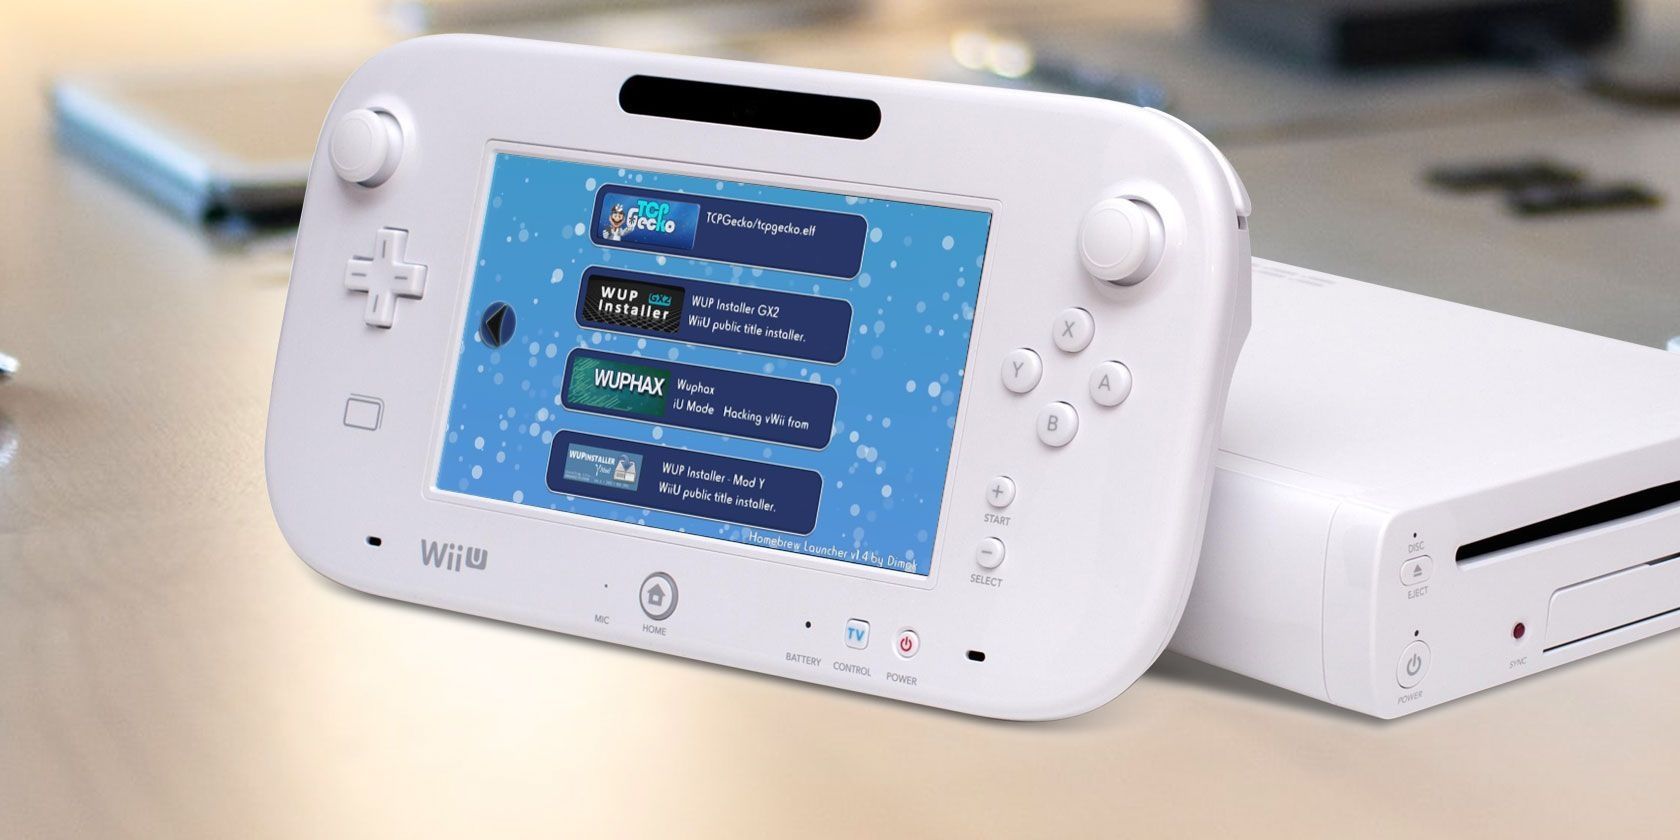 Modez Console-Wii/Wii U Nintendo 3ds family